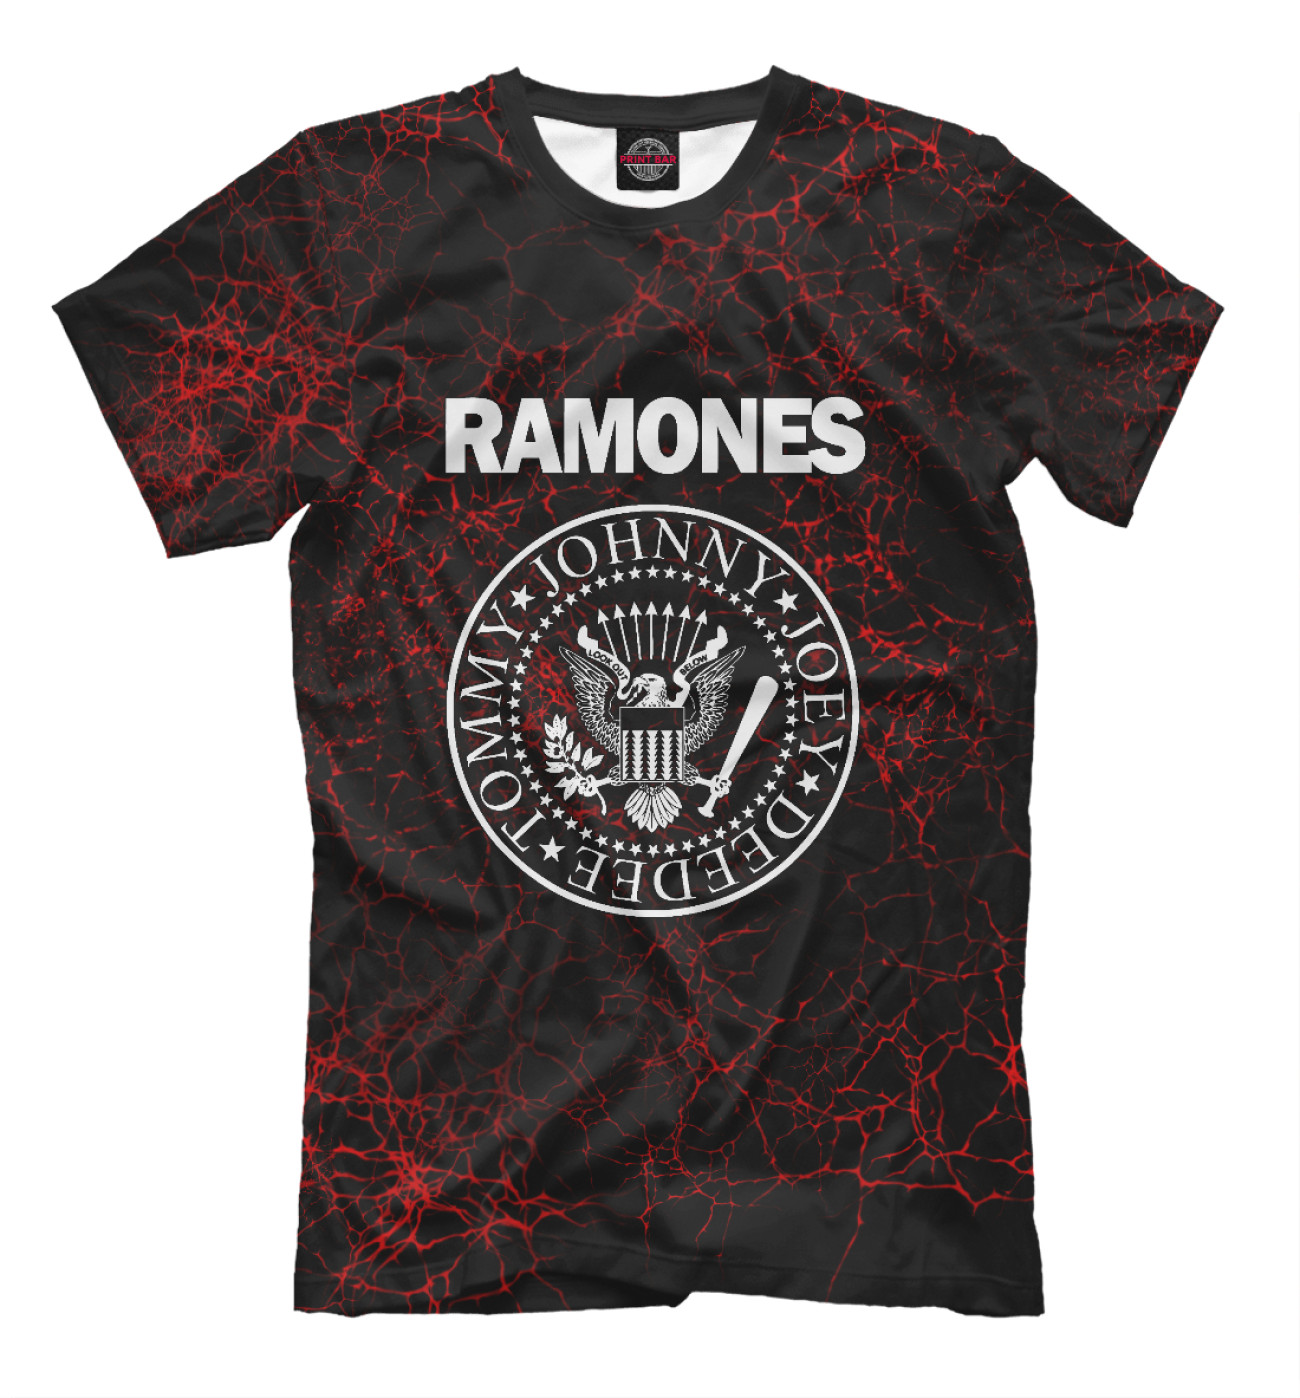 Мужская Футболка Ramones, артикул: RMN-656646-fut-2